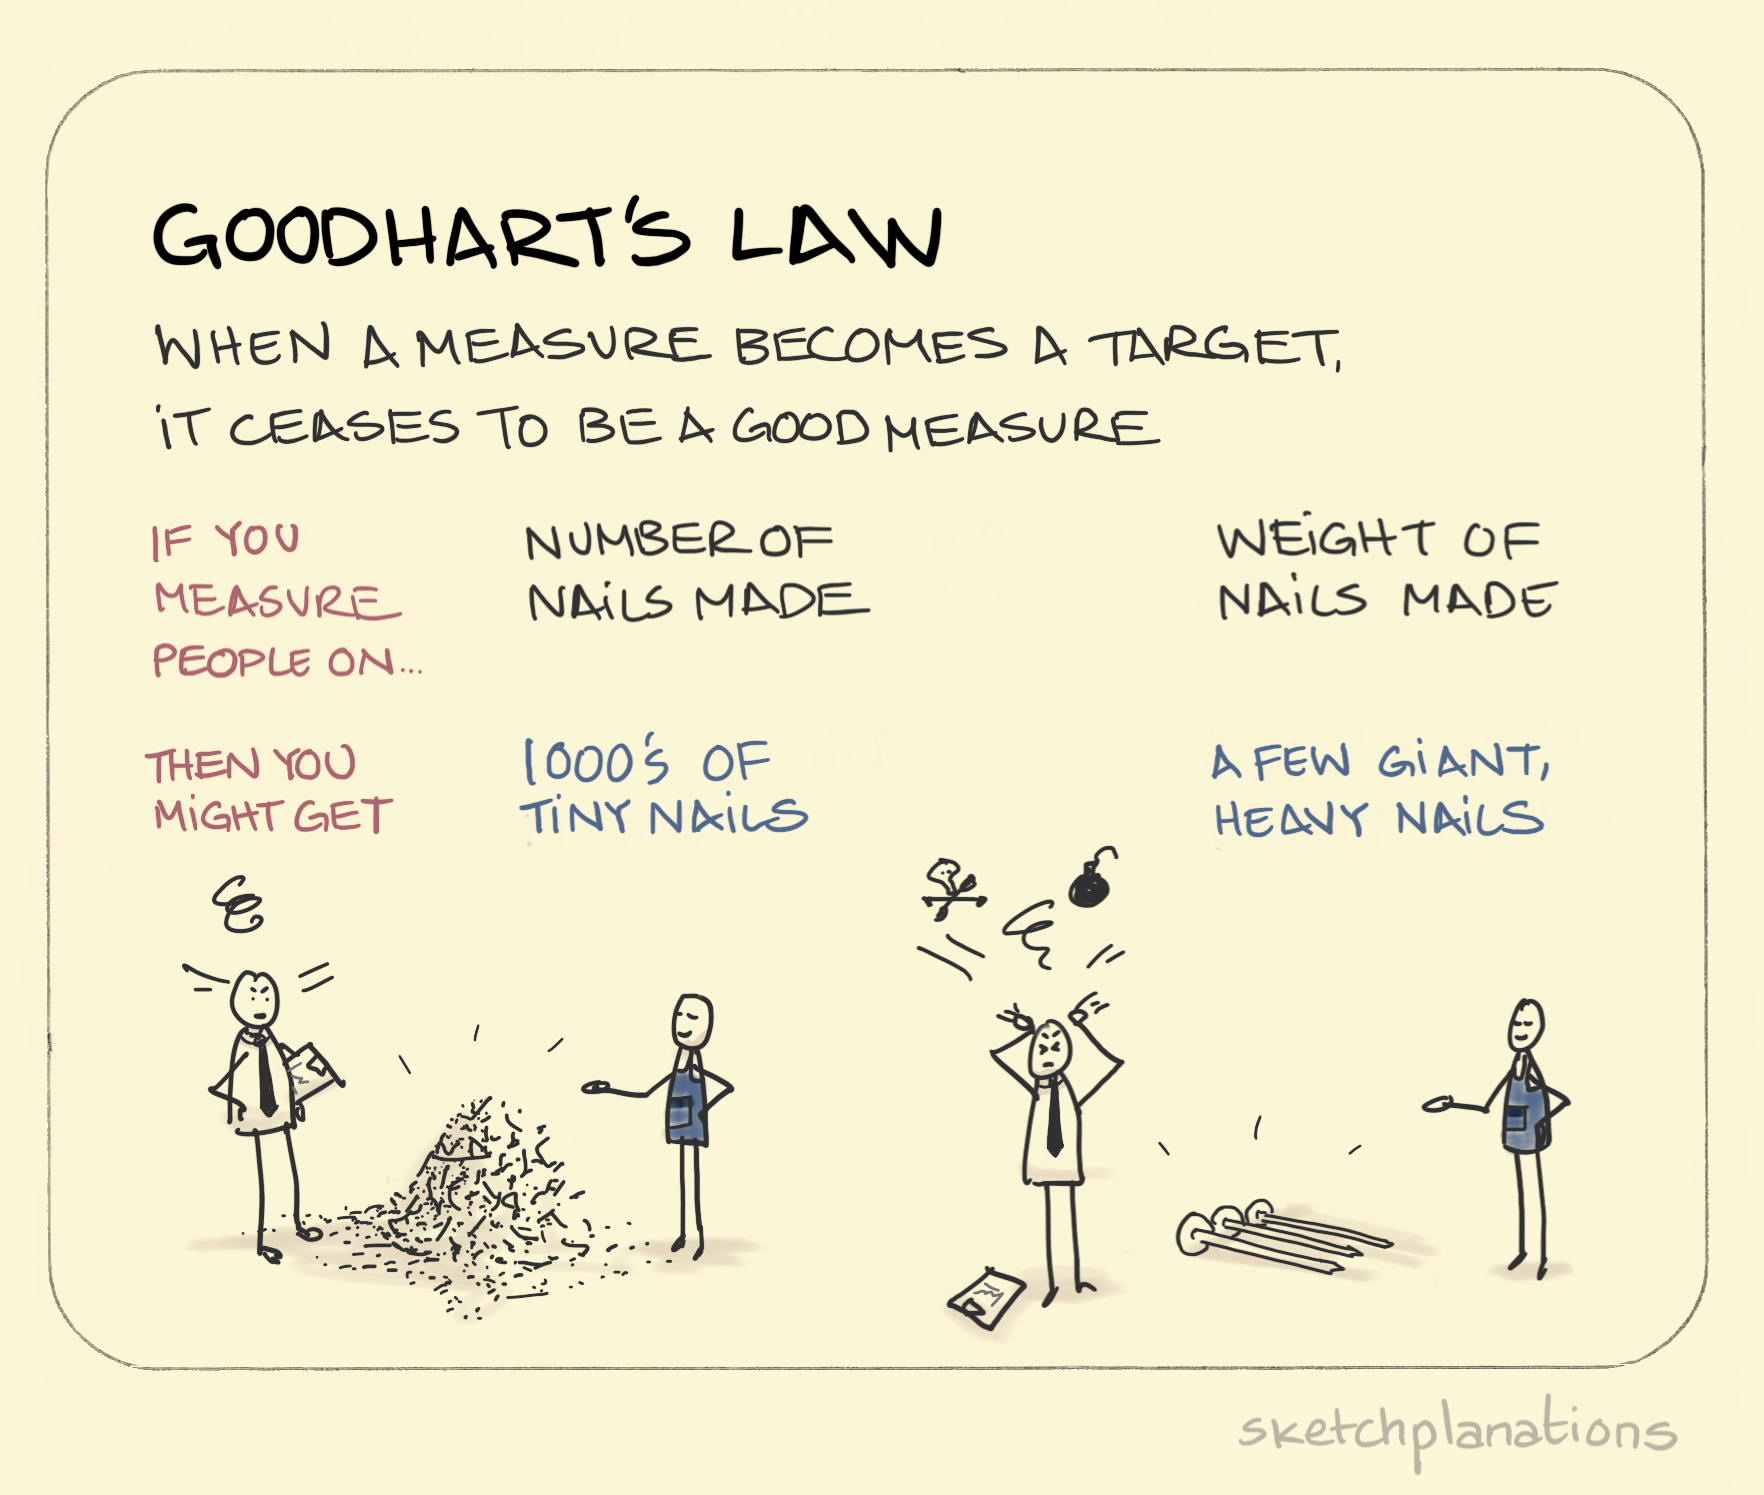 https://sketchplanations.com/goodharts-law